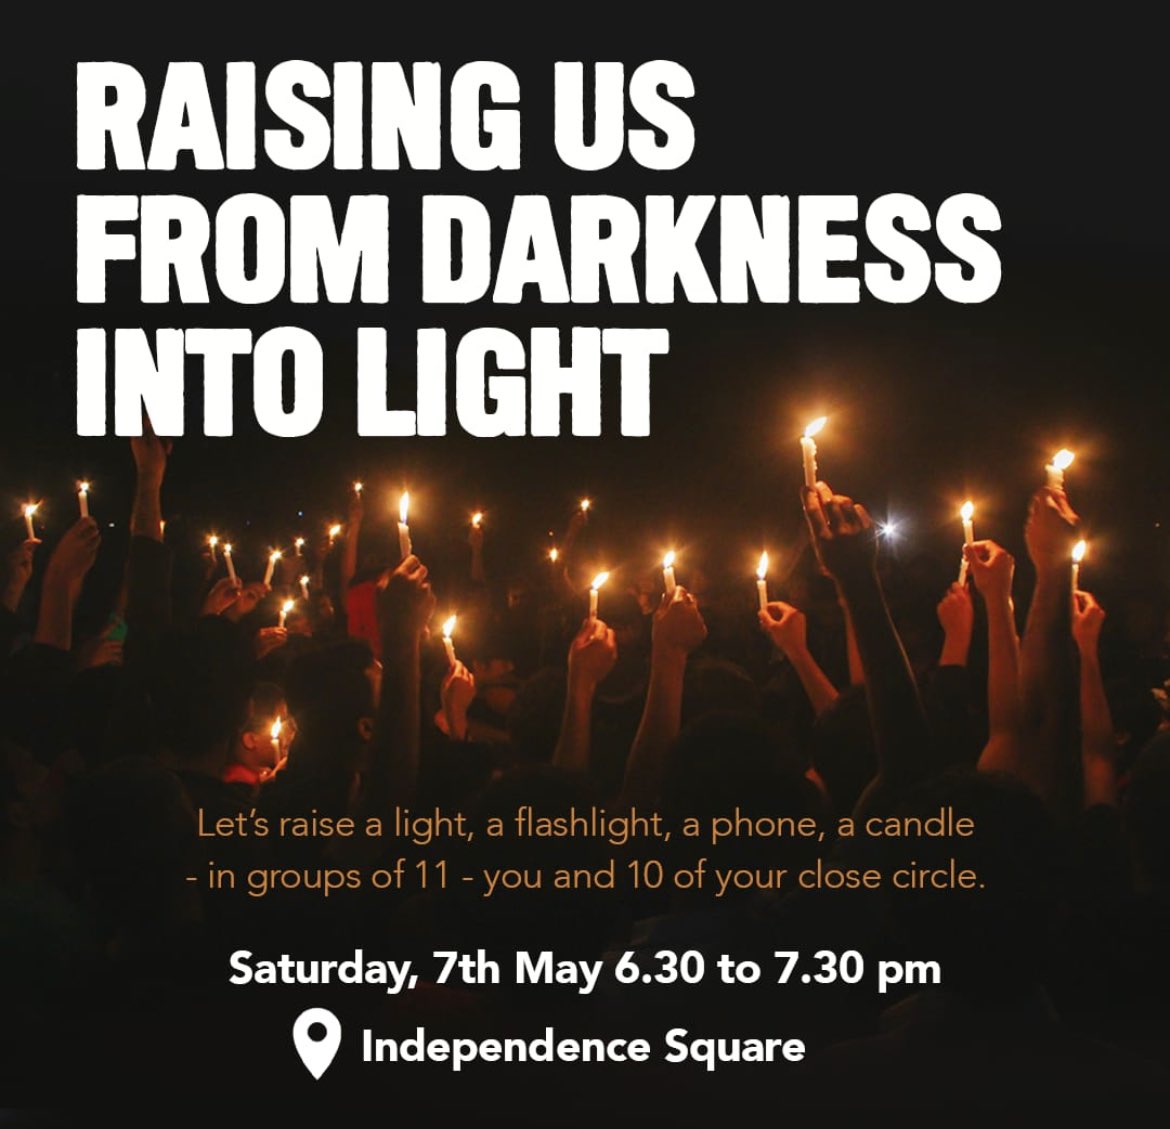 Pleas try to attend this!
#GotaGoHome #RajapaksasGoHome

PL RETWEET